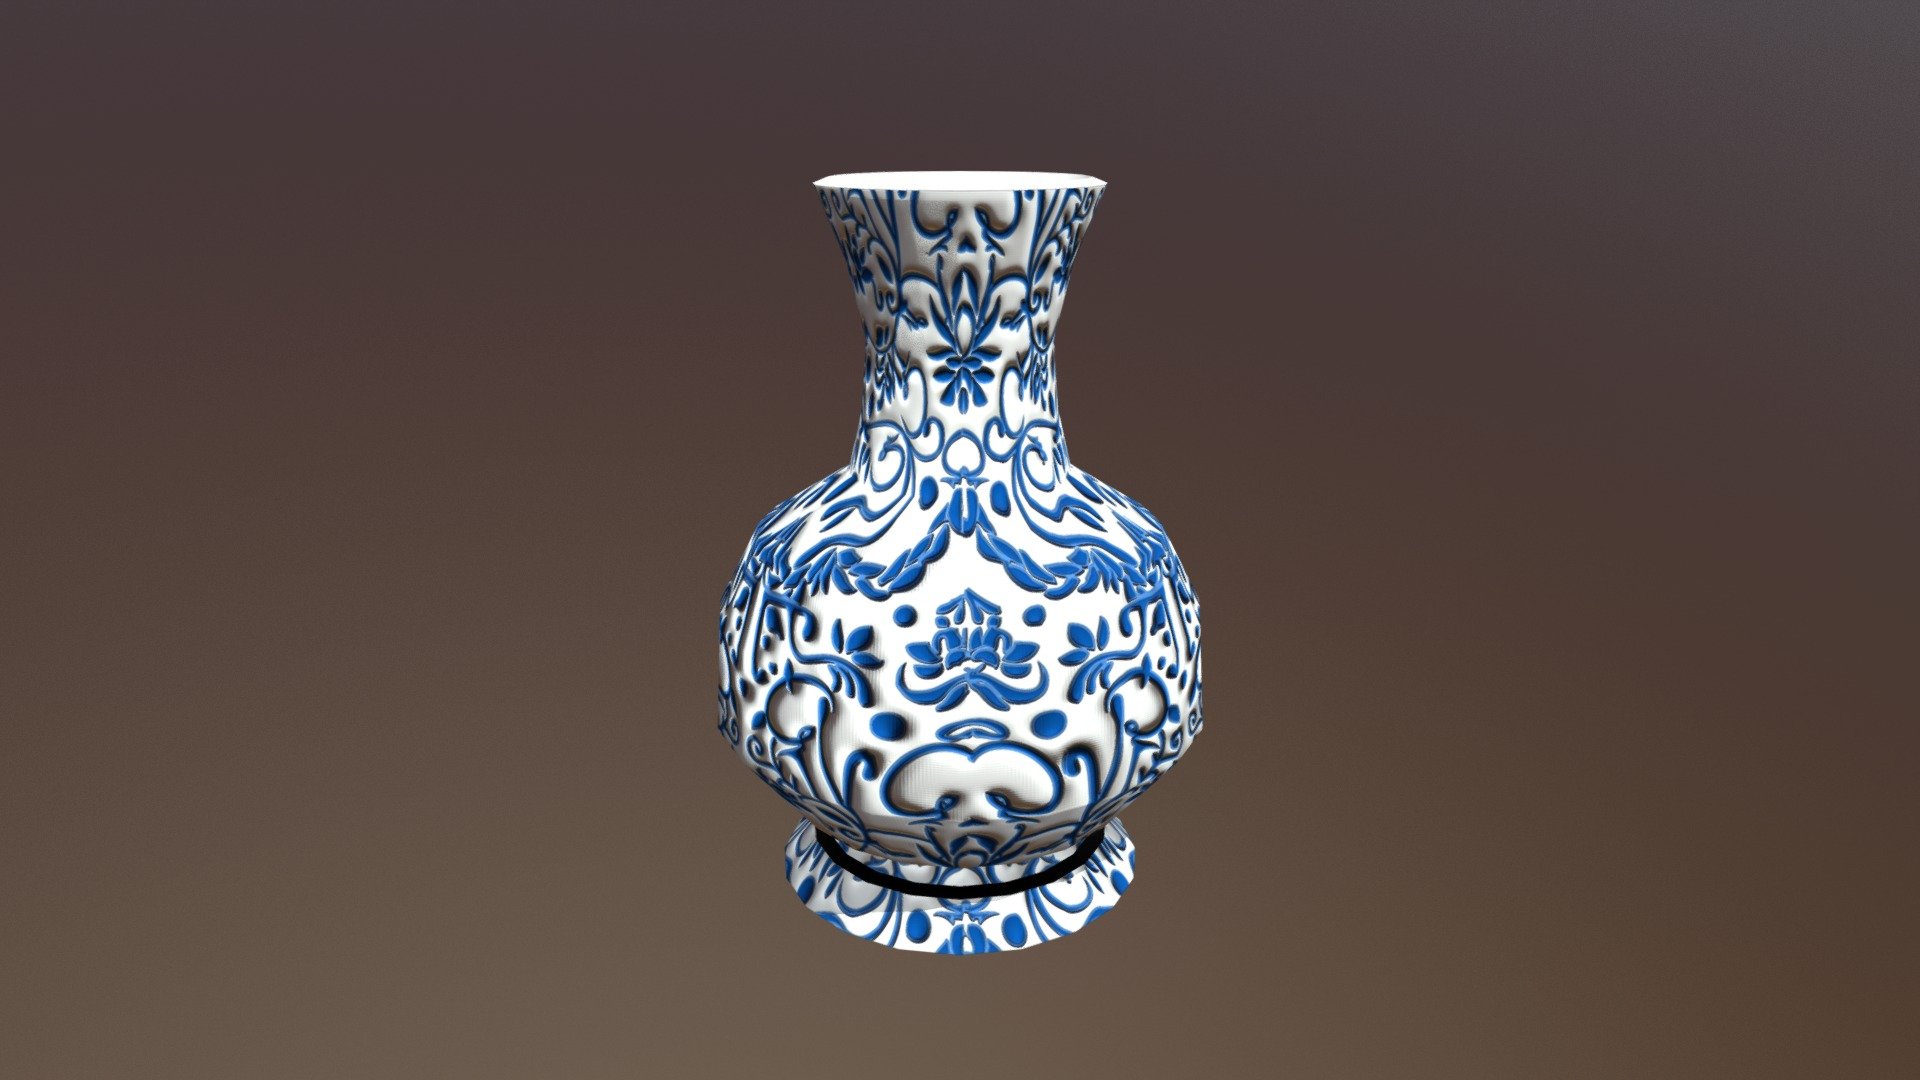 Chinese pottery vase